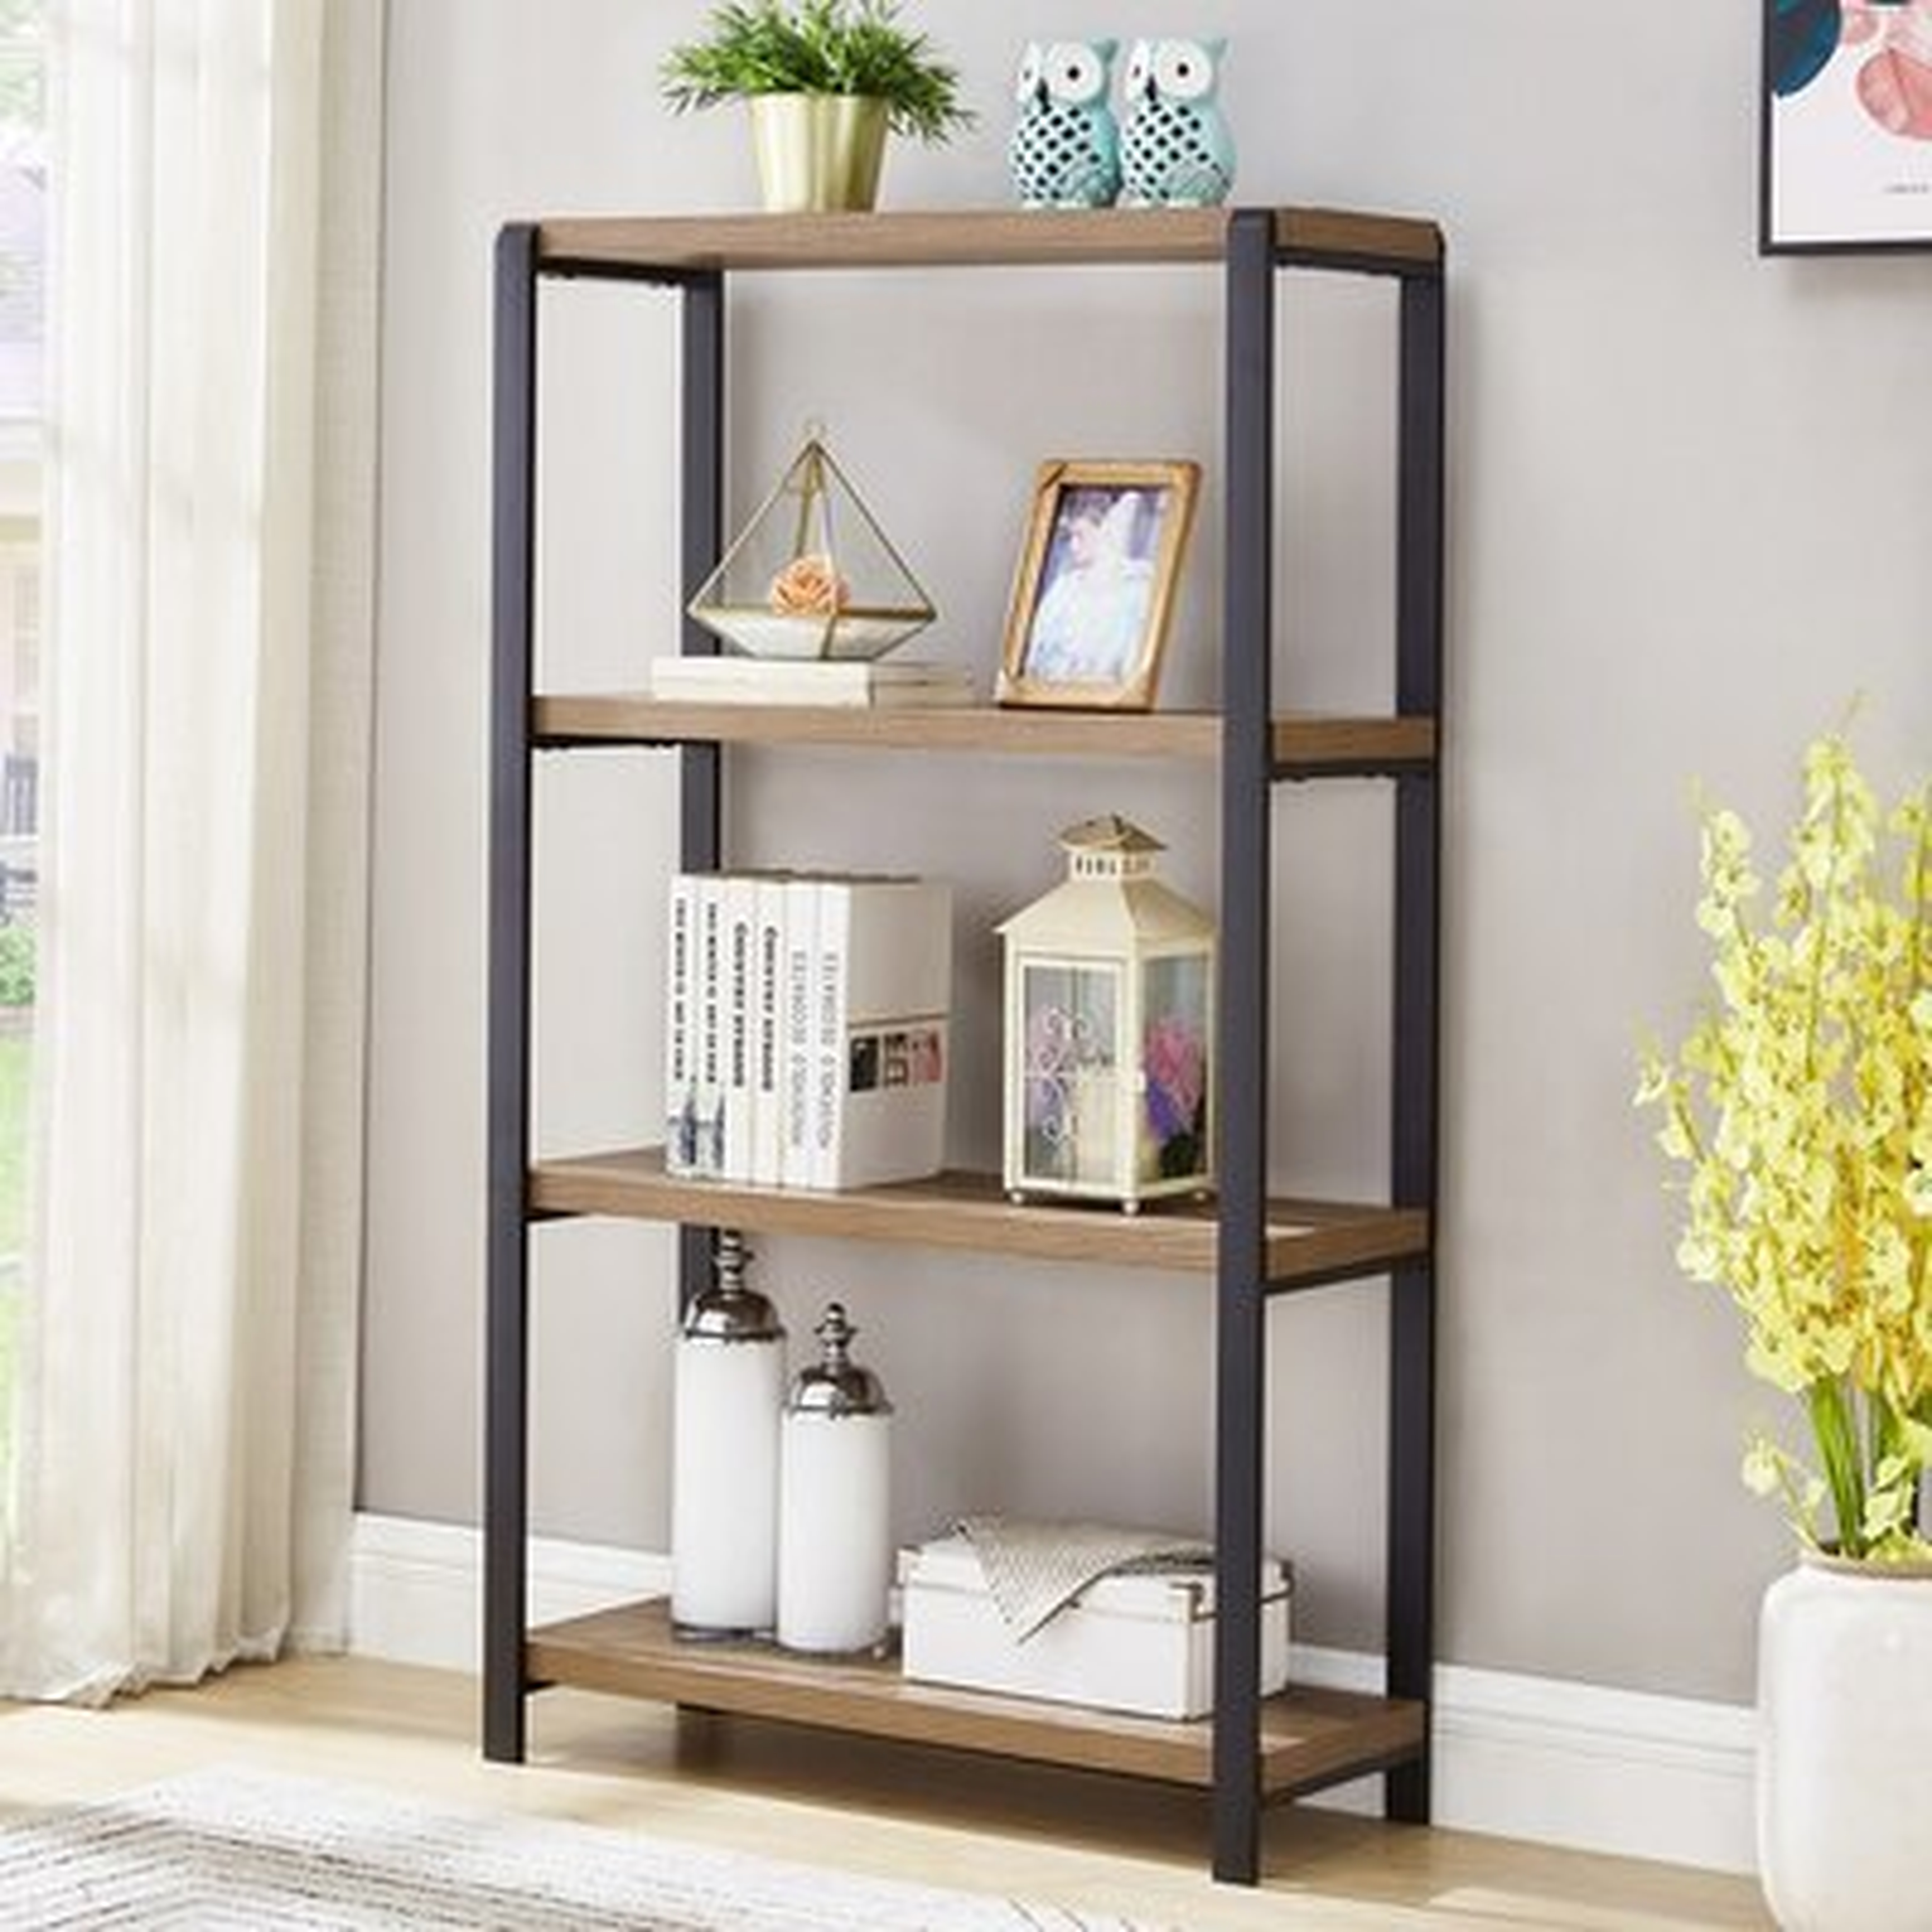 4-Tier Bookshelf, Industrial Etagere Bookcase For Home Office, Rustic Wood And Metal Book Shelves, Oak - Wayfair